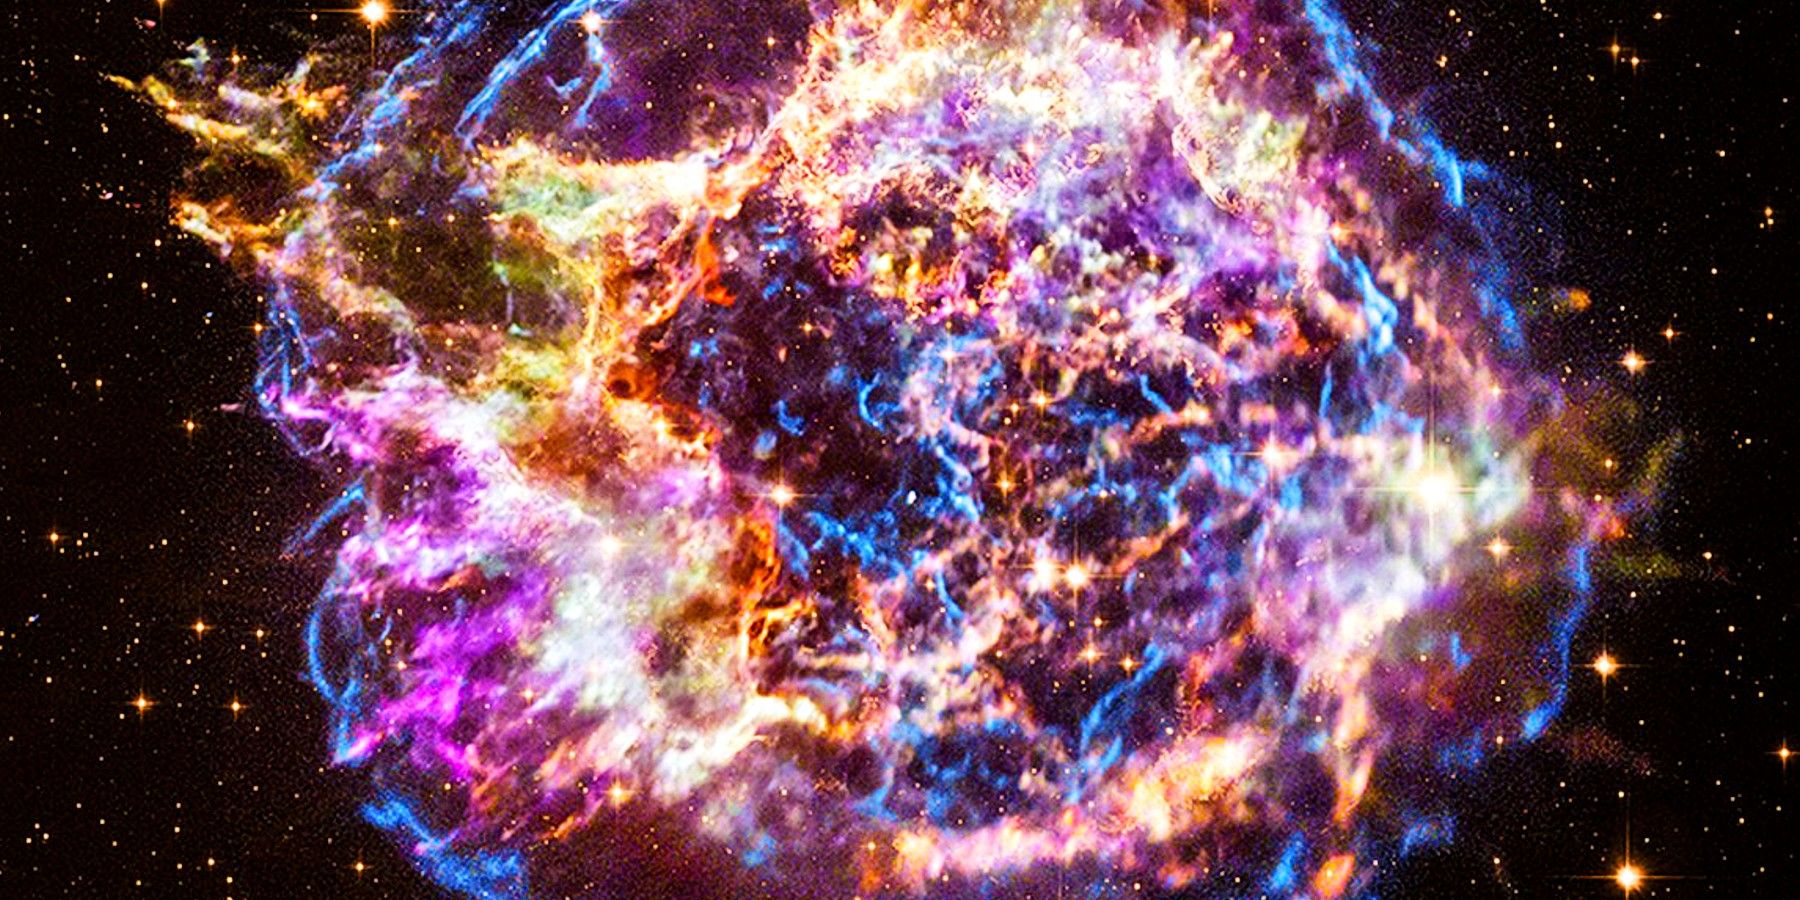 Supernova Explosion